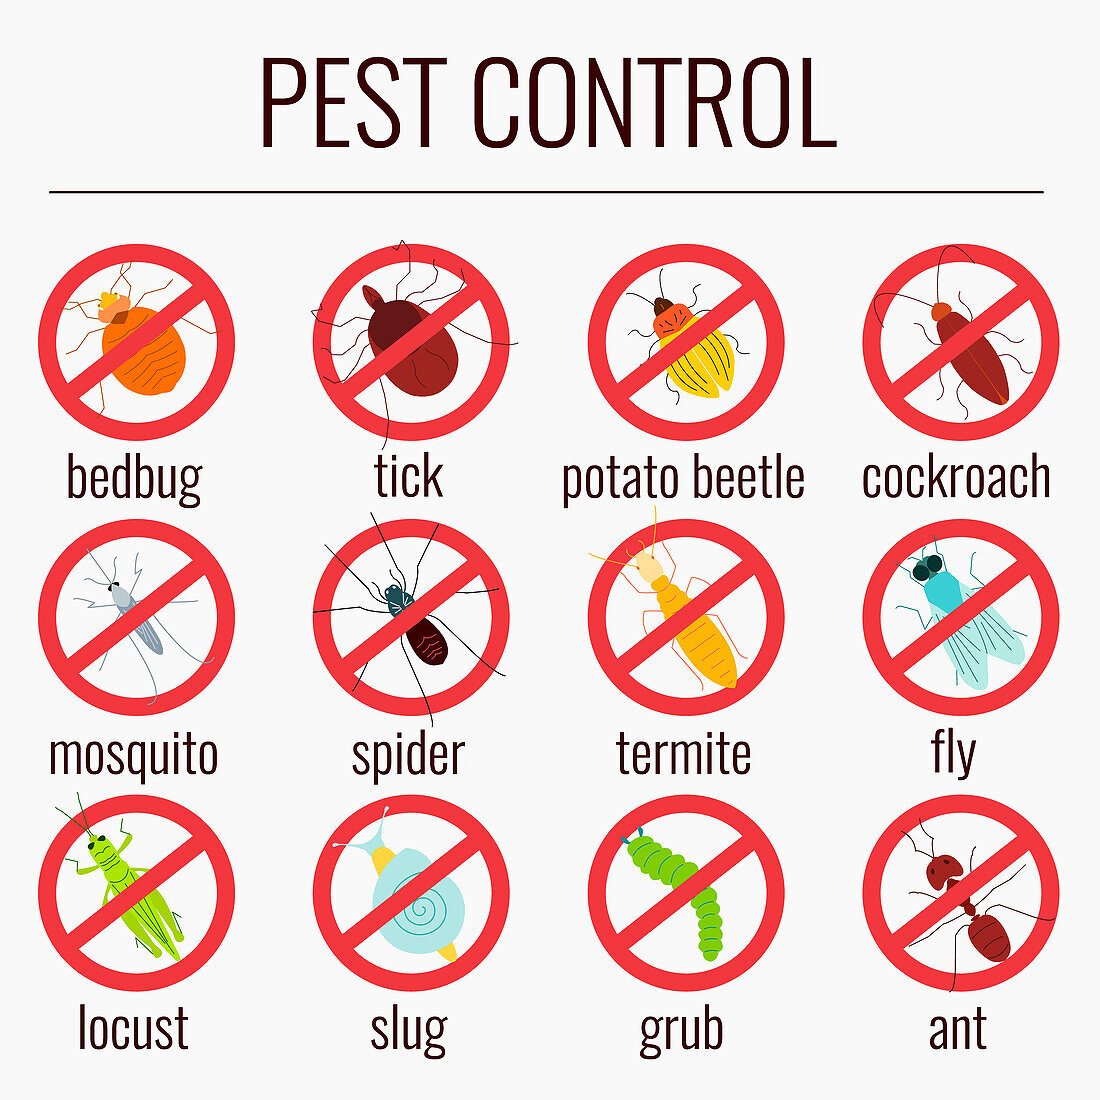 Pest prohibition signs, conceptual illustration